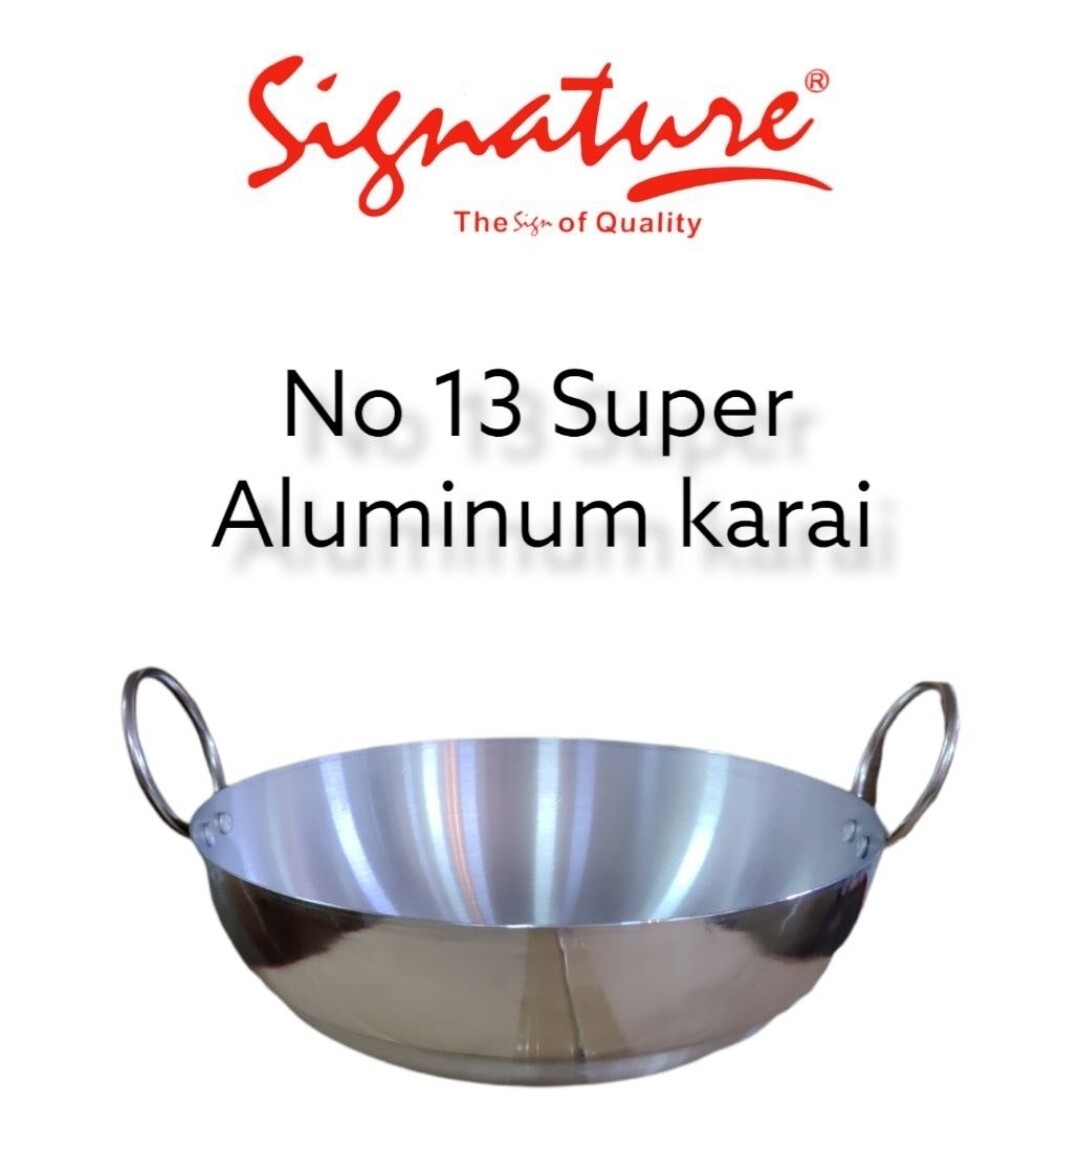 Signature No 13 Aluminum Karai